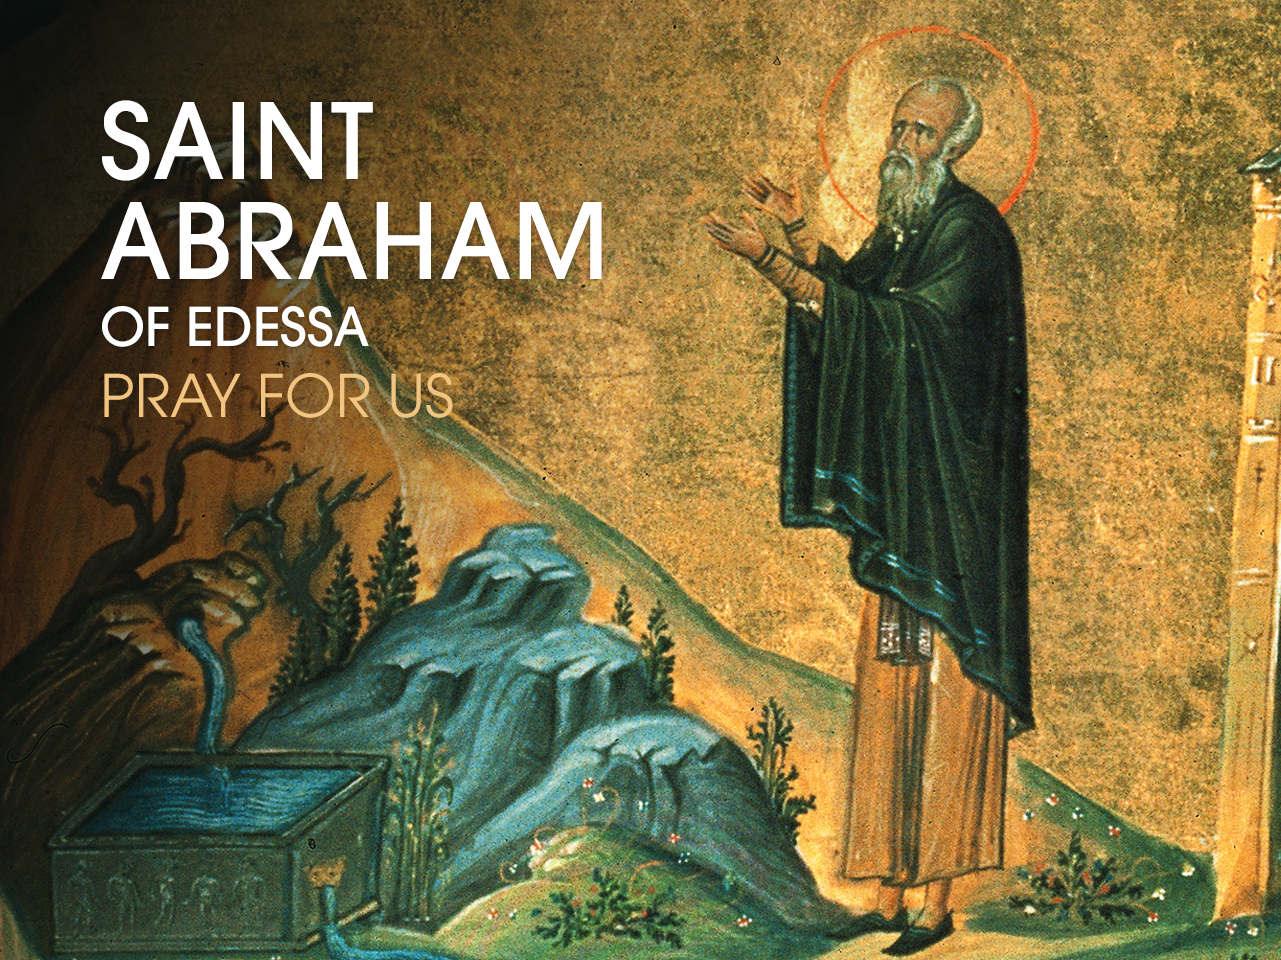 St. Abraham of Edessa